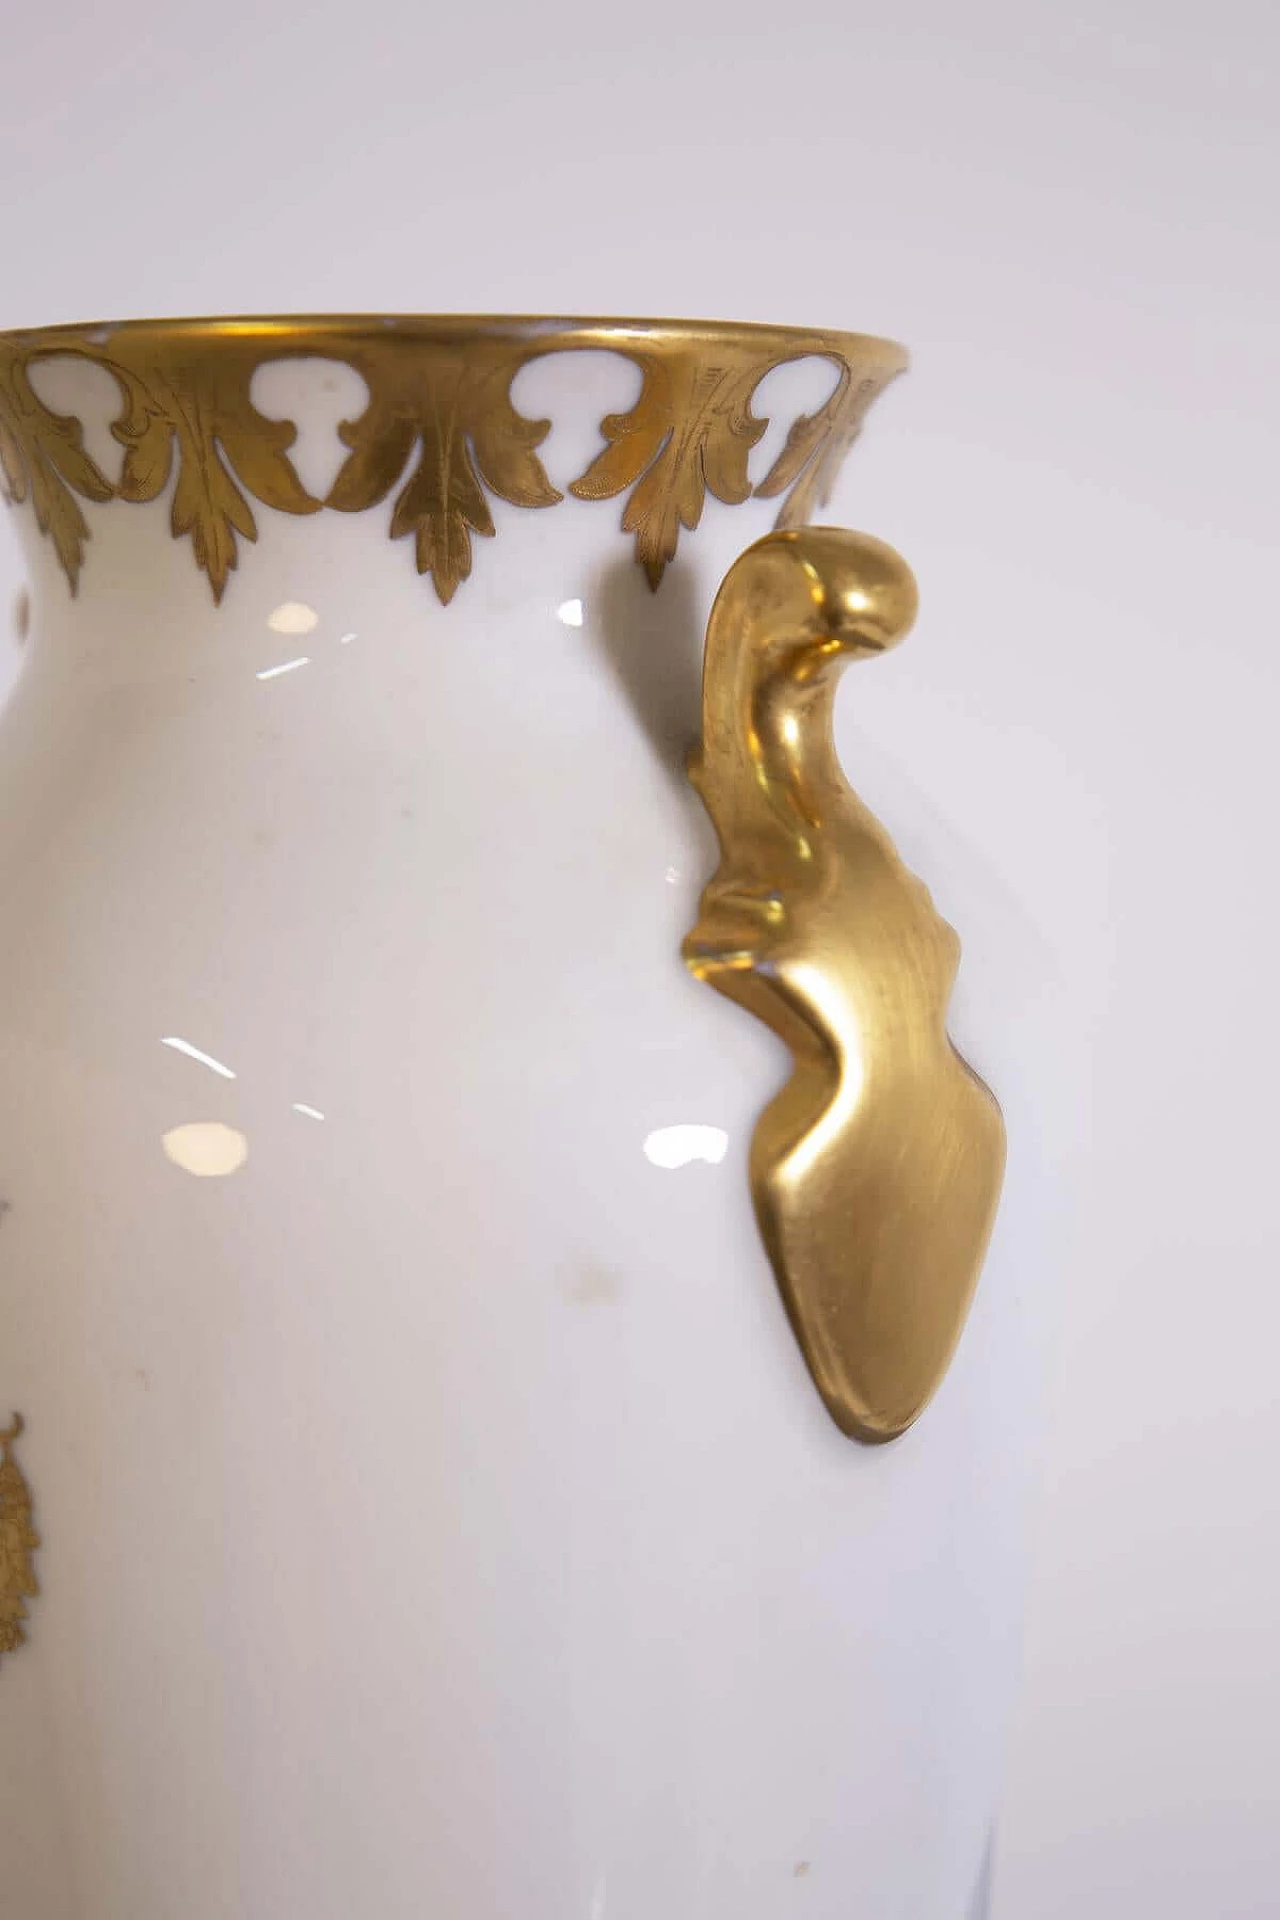 Arrigo Finzi's porcelain vase, painted in gold, 1950s 1408465